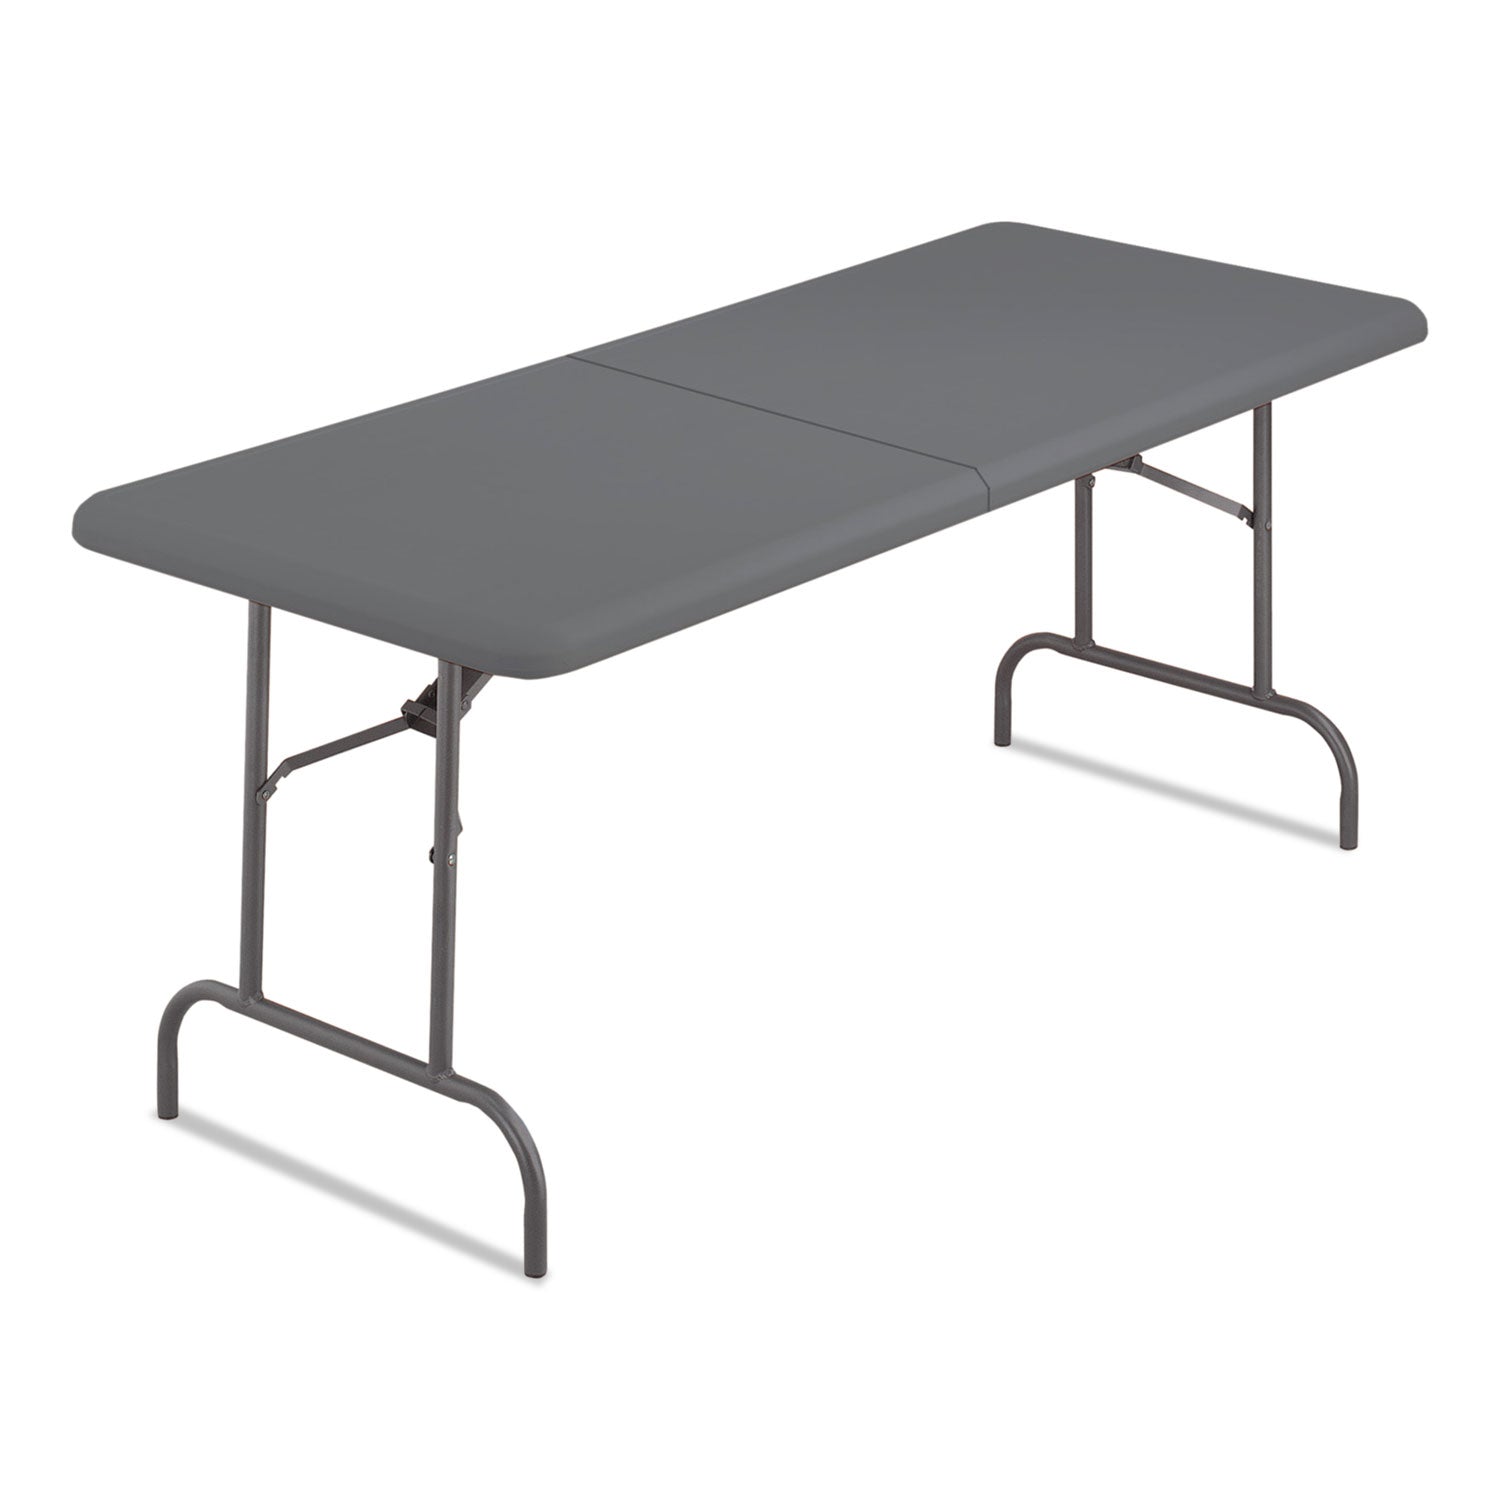 IndestrucTable Classic Bi-Folding Table, Rectangular, 60" x 30" x 29", Charcoal - 1